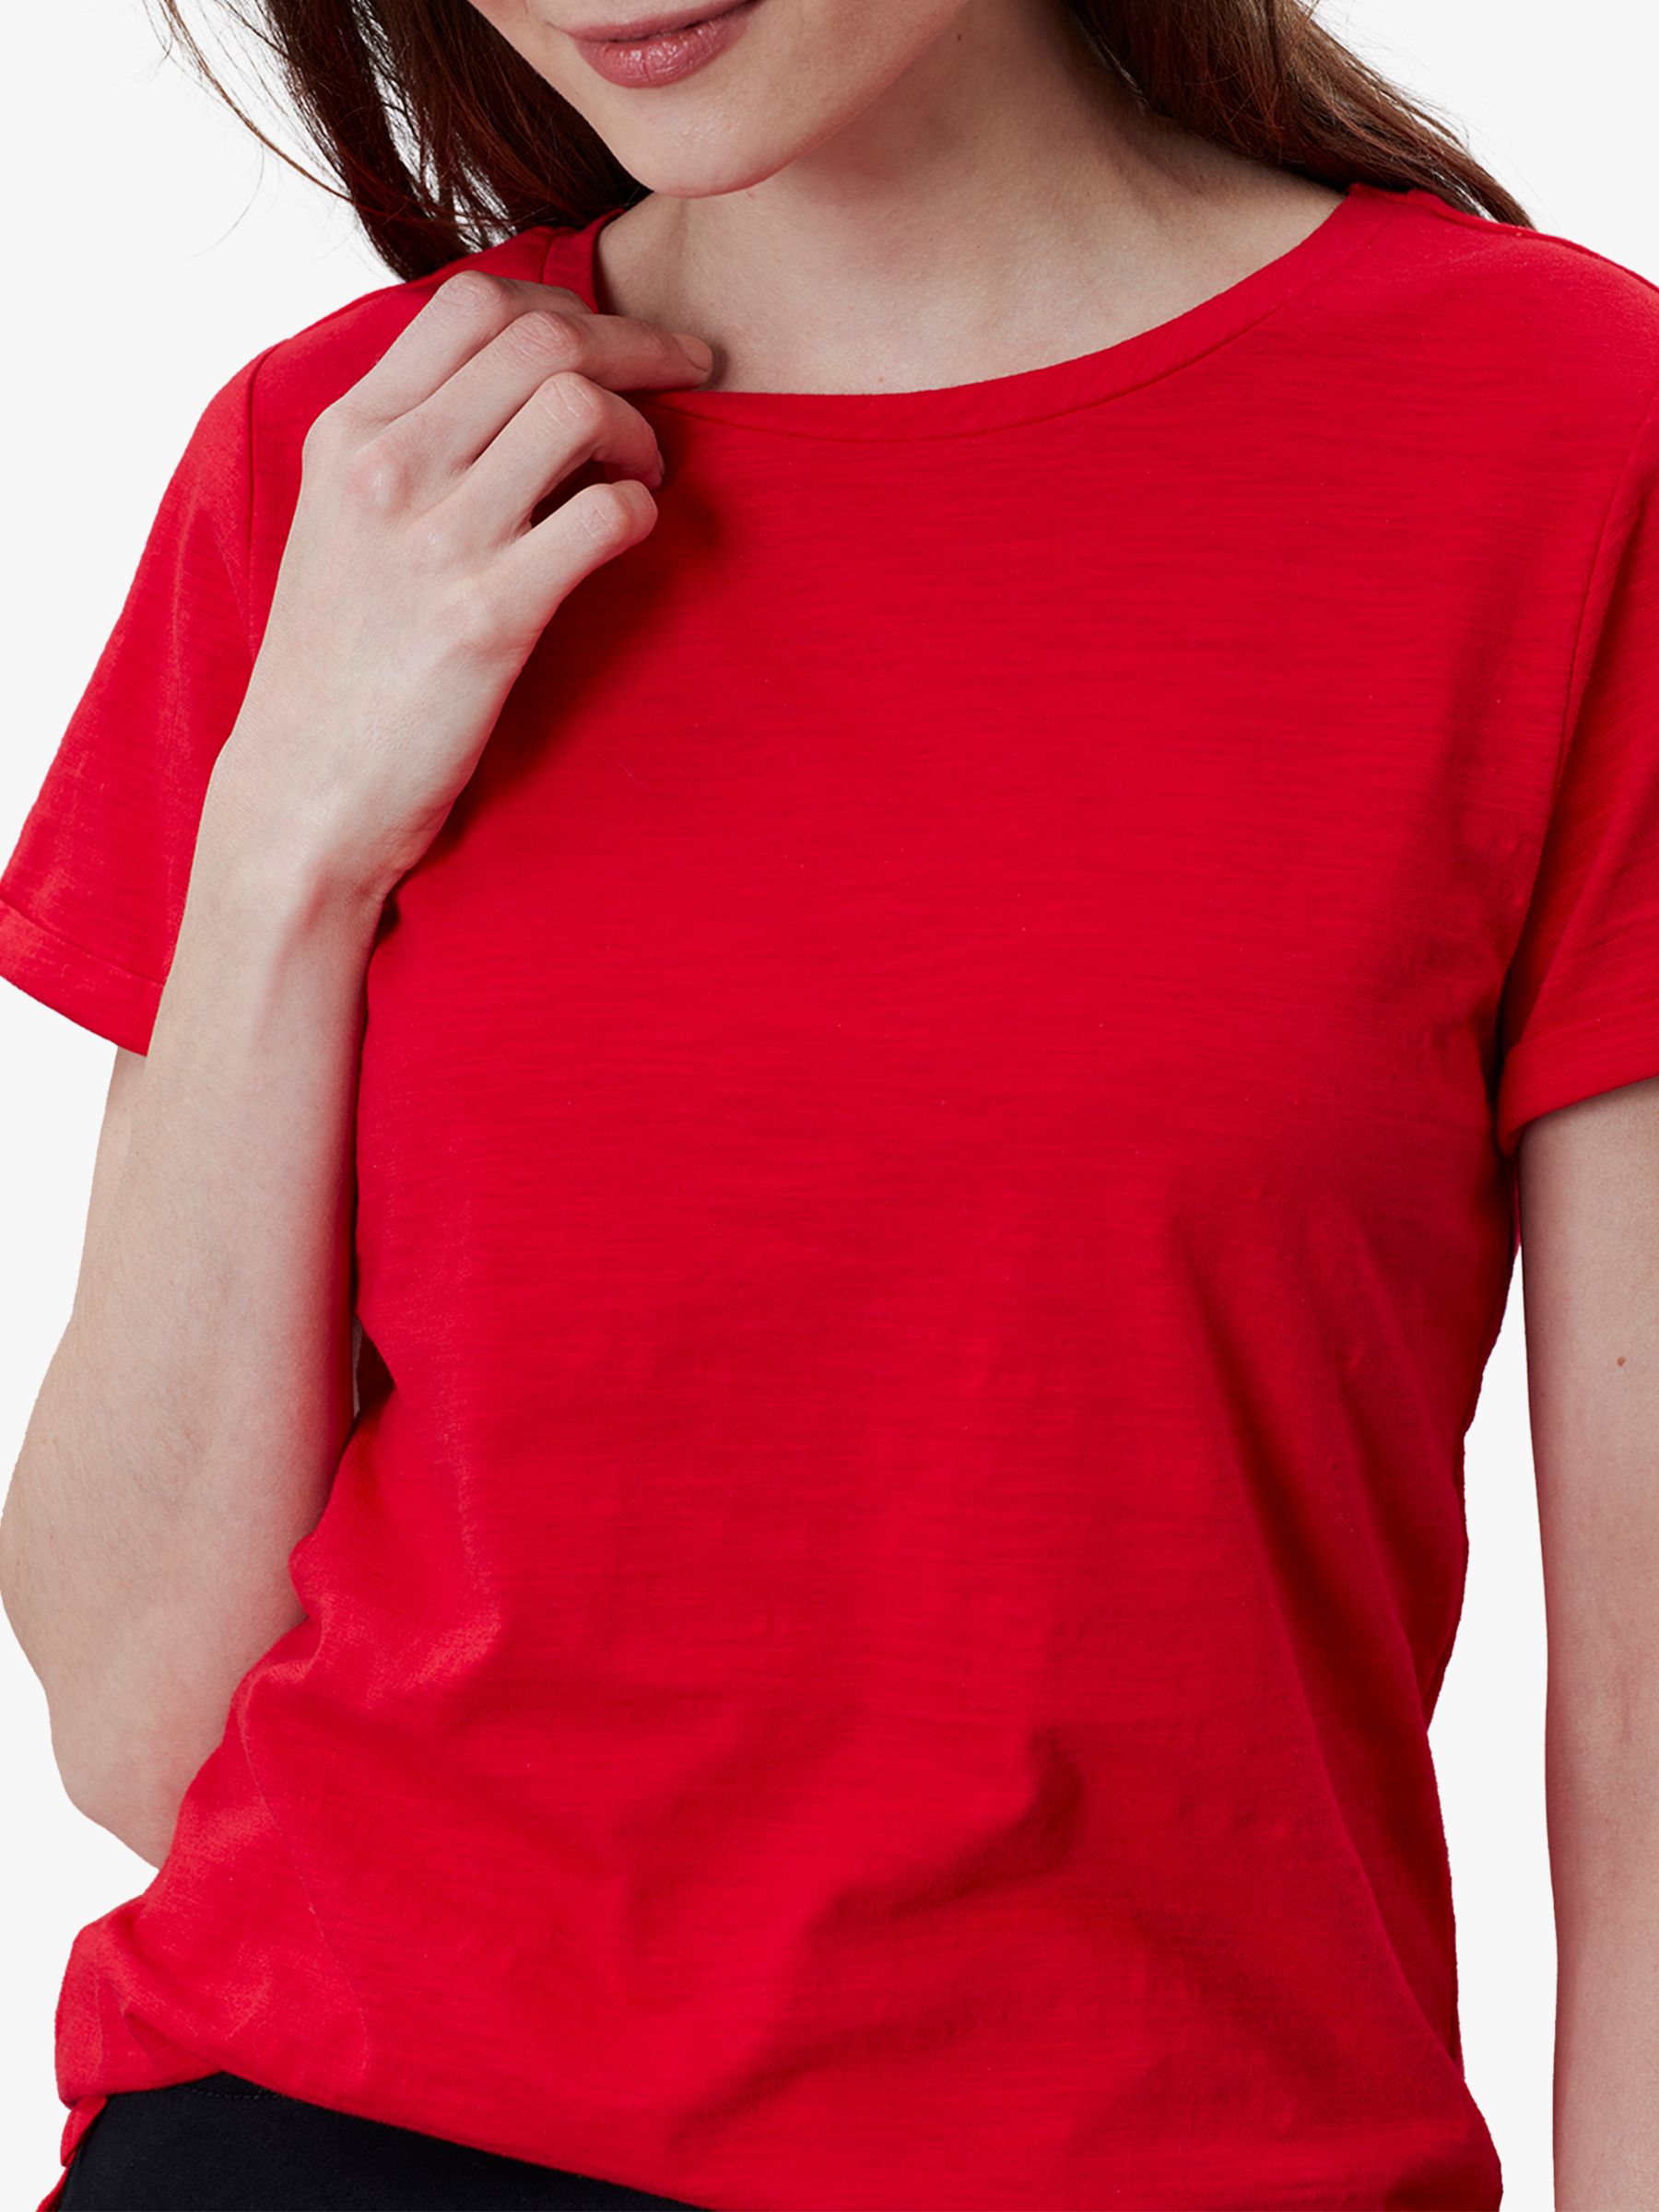 plain red t shirt girl